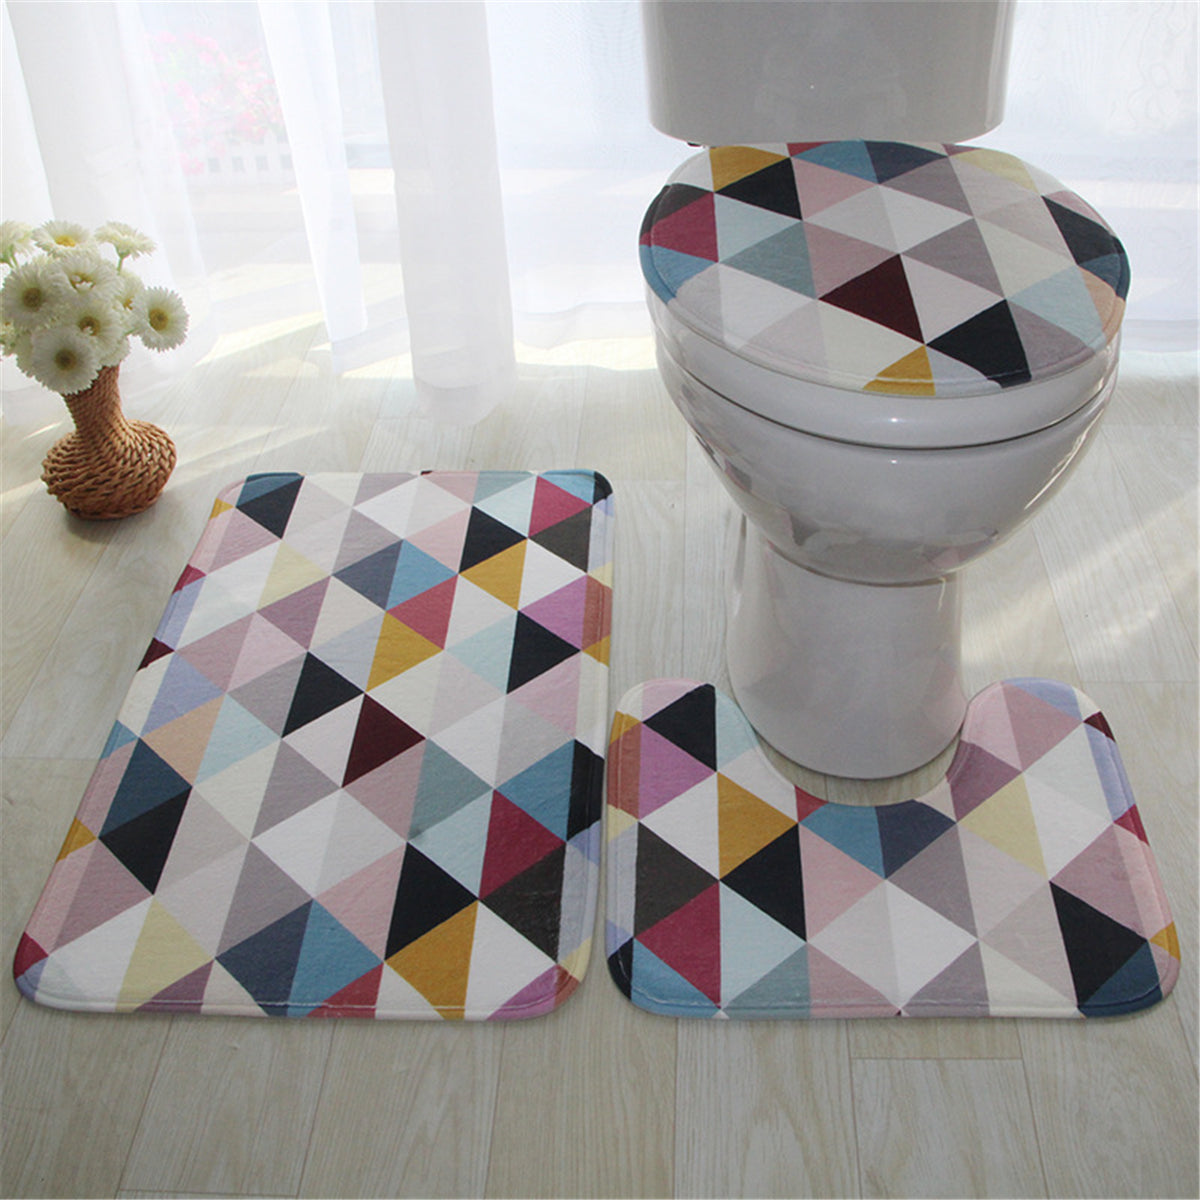 Anti-Slip Floor Mat Bathroom Pedestal Rug Toilet Lid Cover Floor Mat Bath Mat Bathroom Accessories for Home Decoration